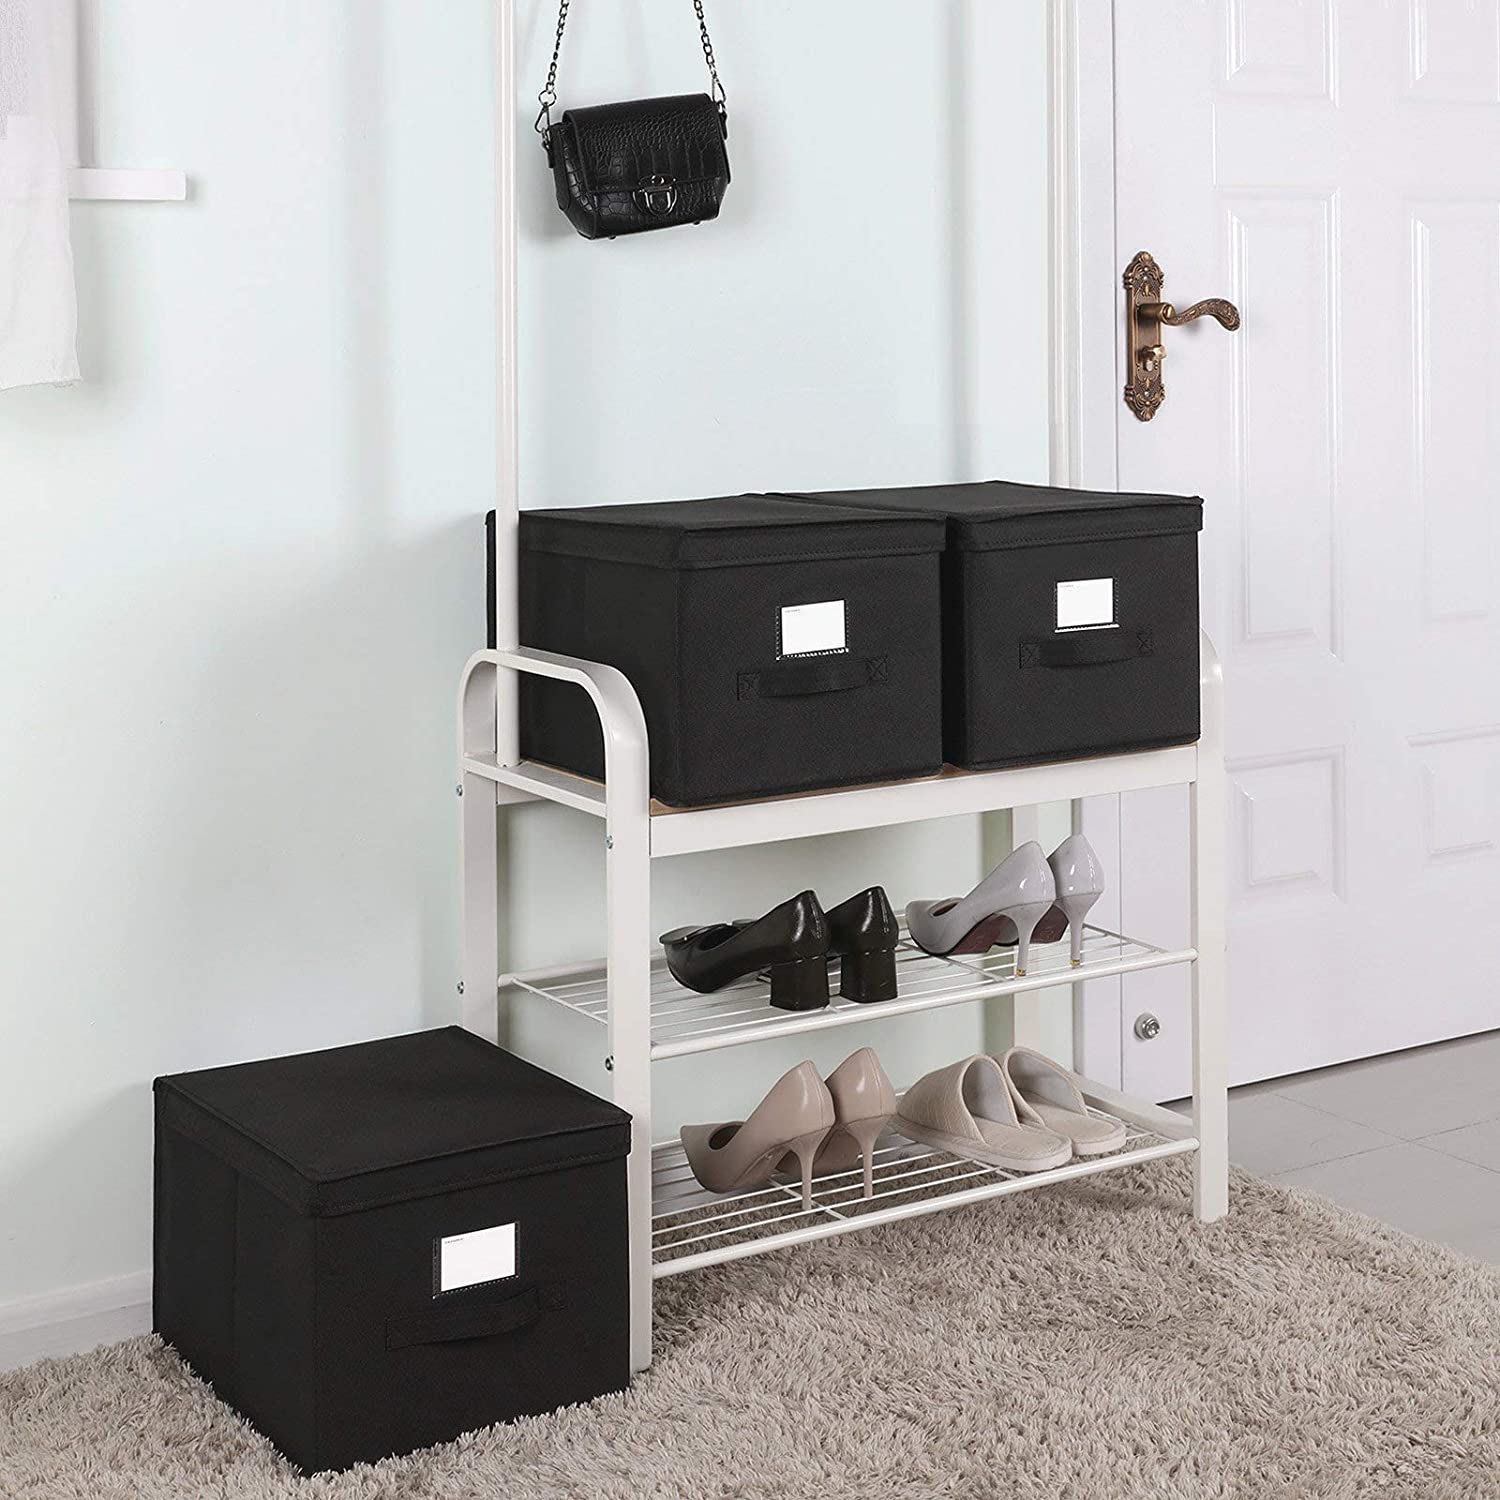 Nancy's Storage Box with Lid Black - Foldable Storage Boxes 3 Pieces